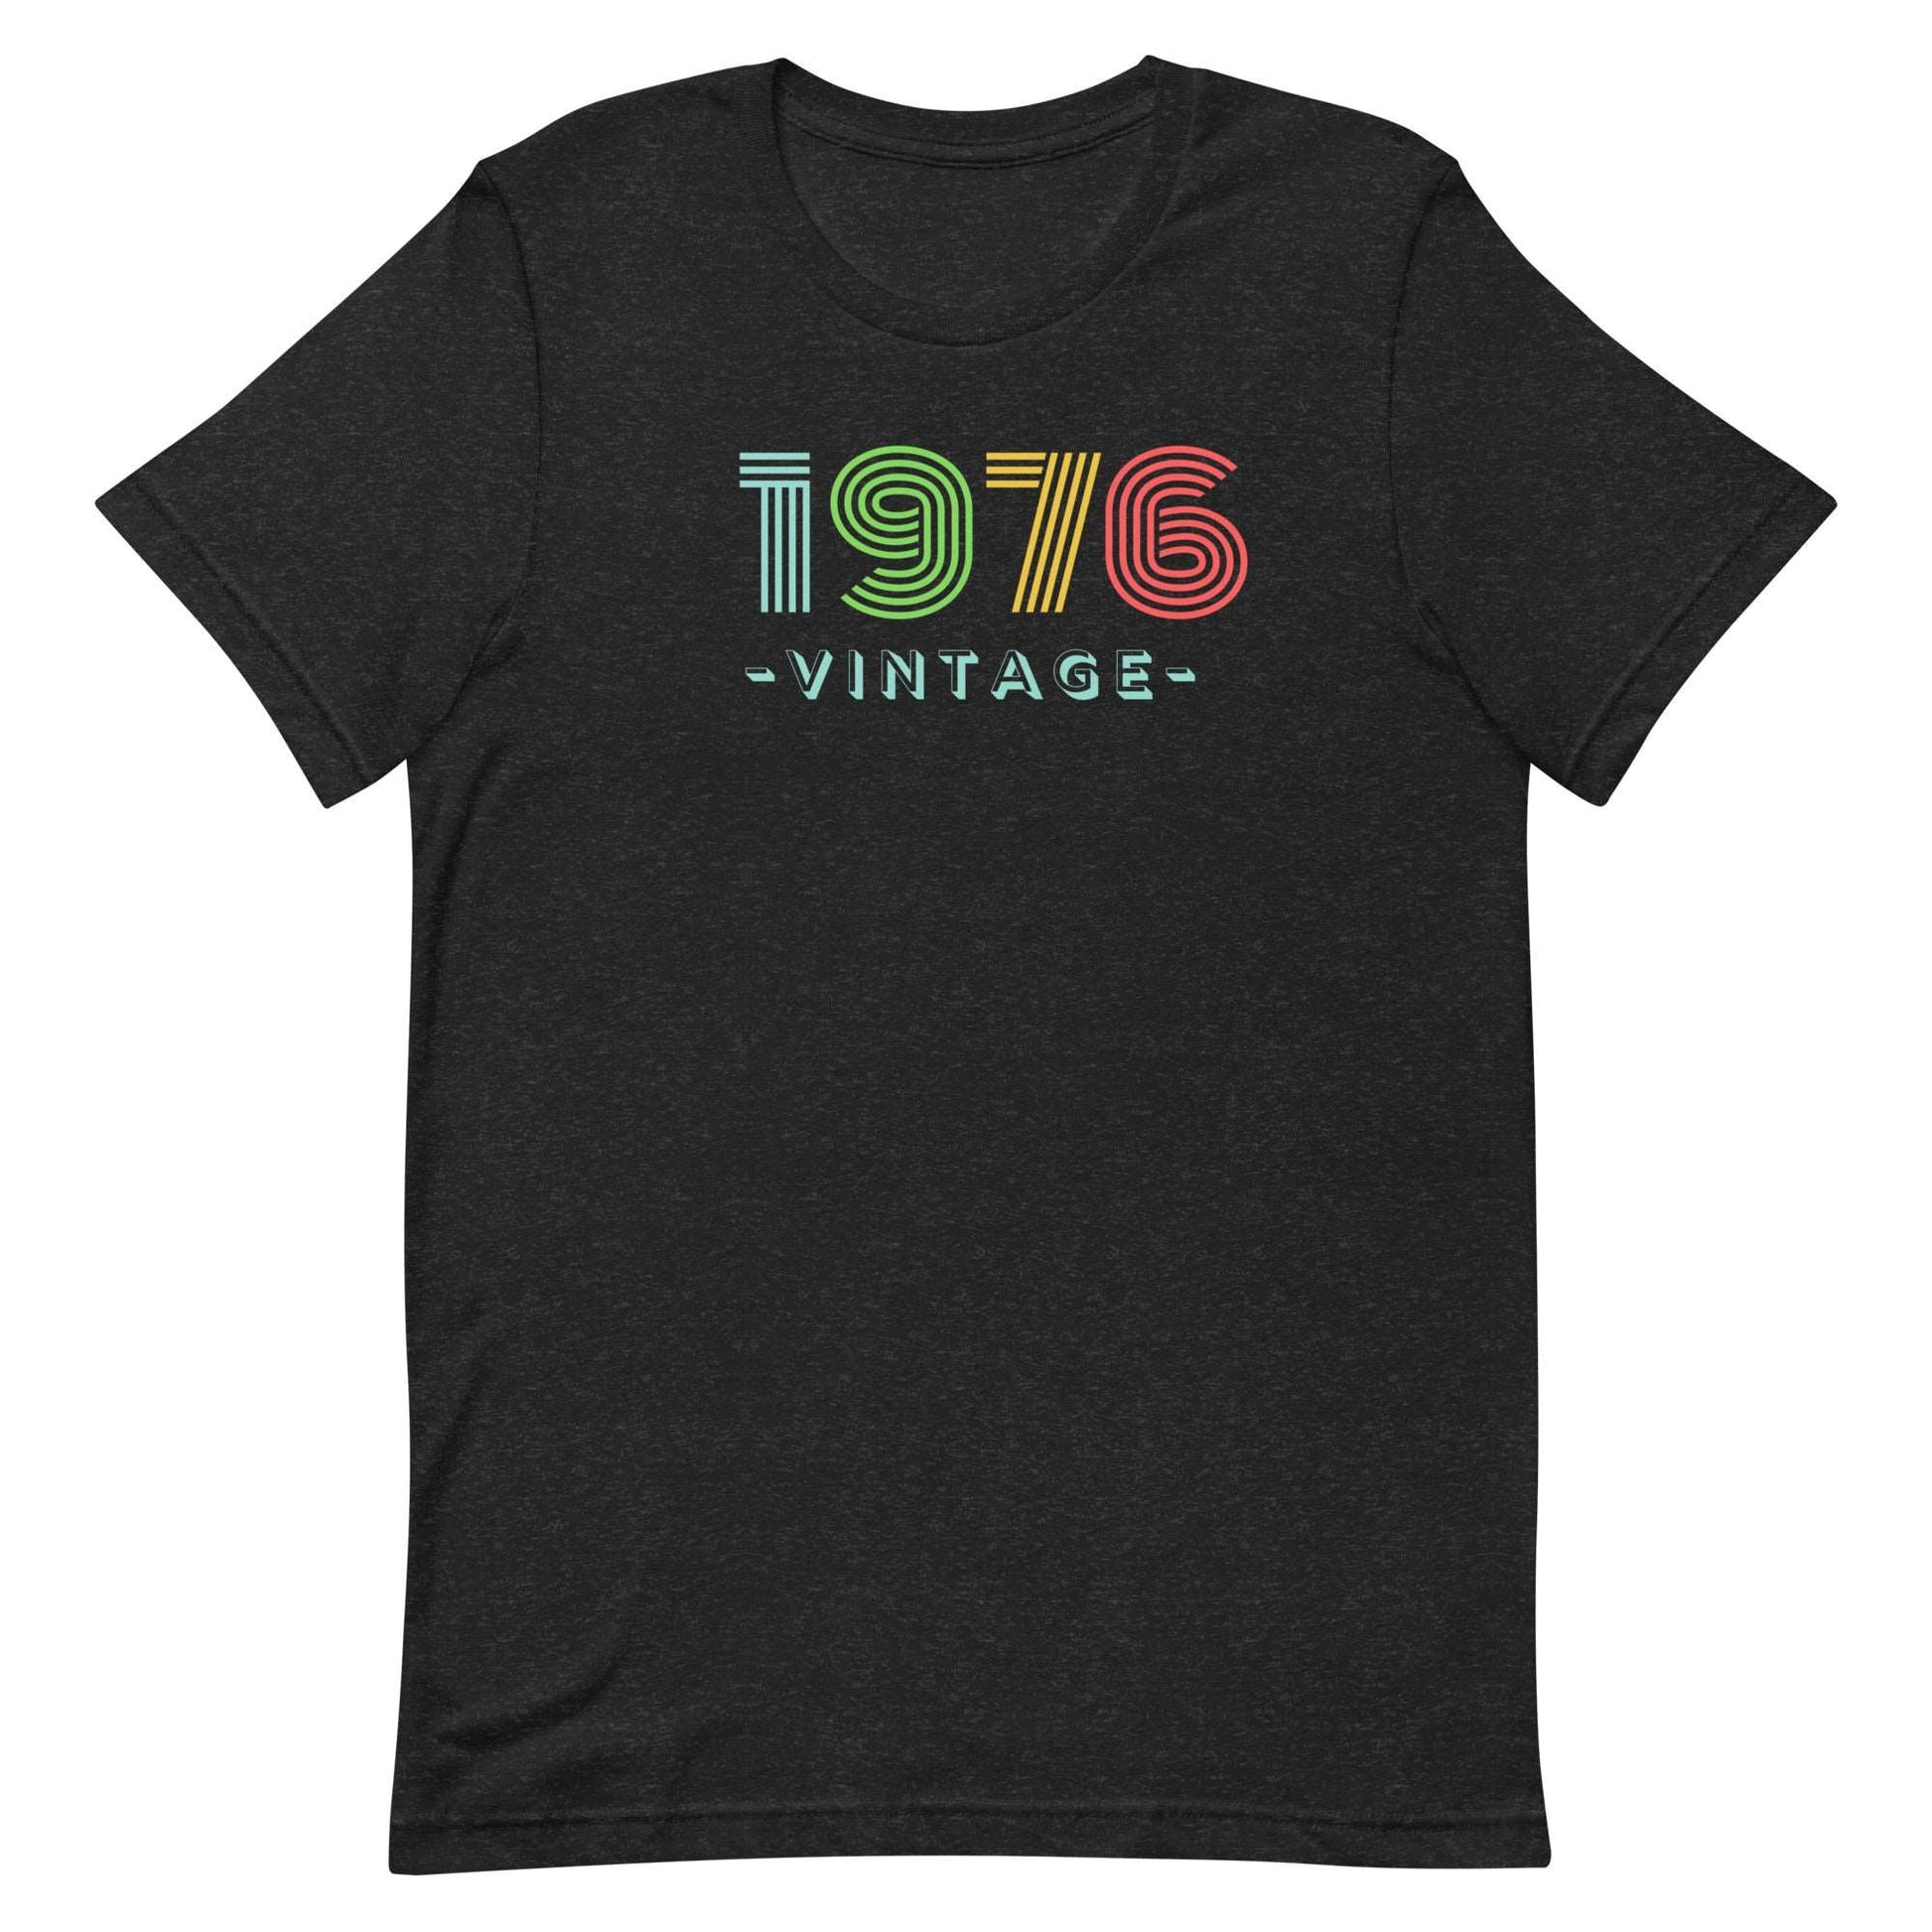 1976 Vintage. Unisex t-shirt